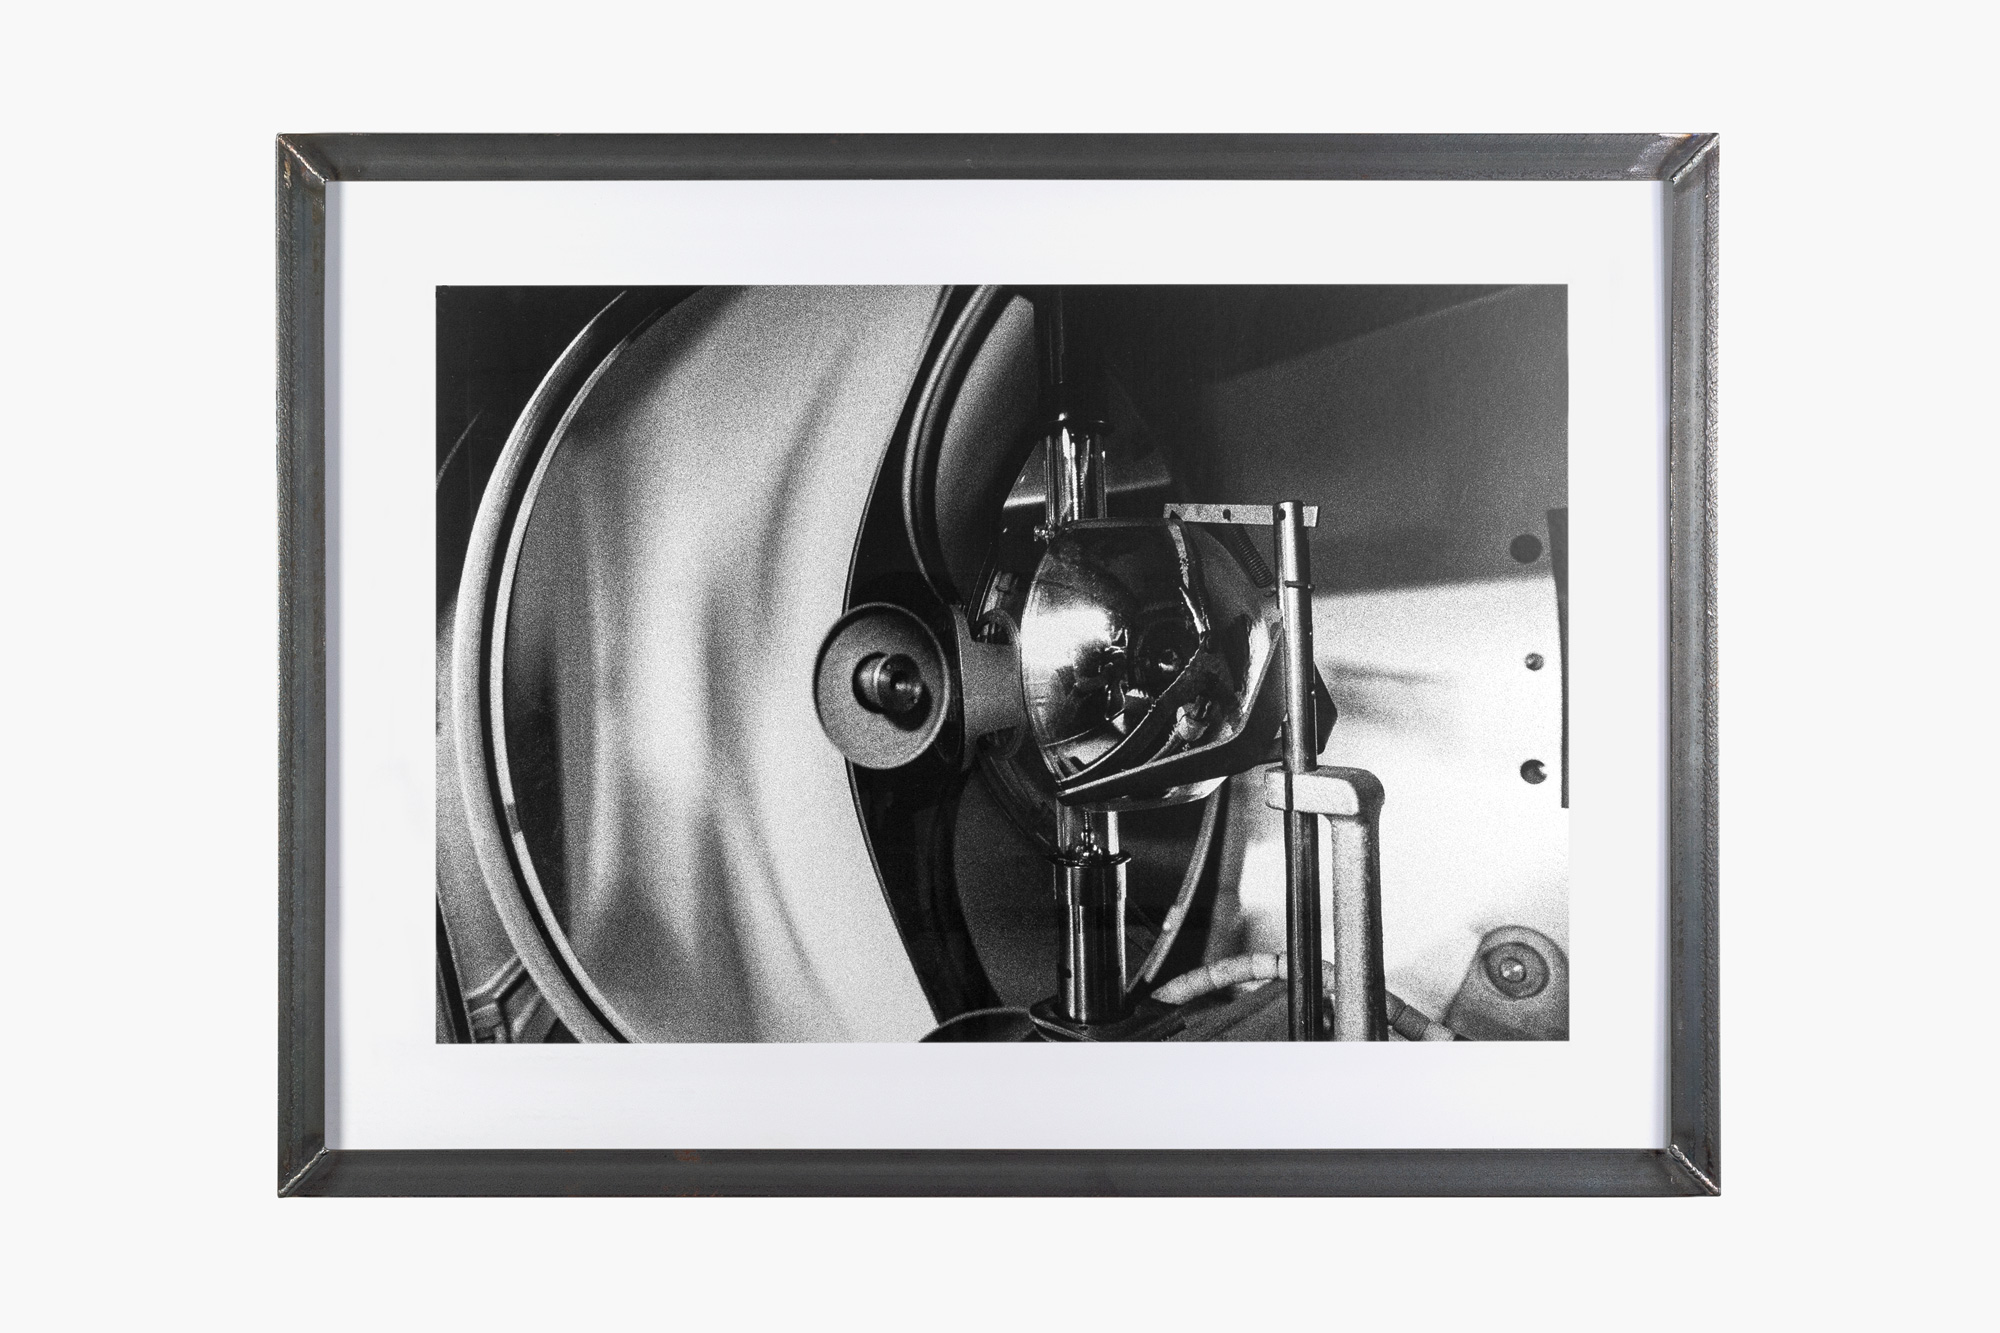 Stephan Machac xenon 2010 Hohlspiegel (Xenon#3) - 2010 - inkjet print - untreated steel frame - 91 x 67 cm